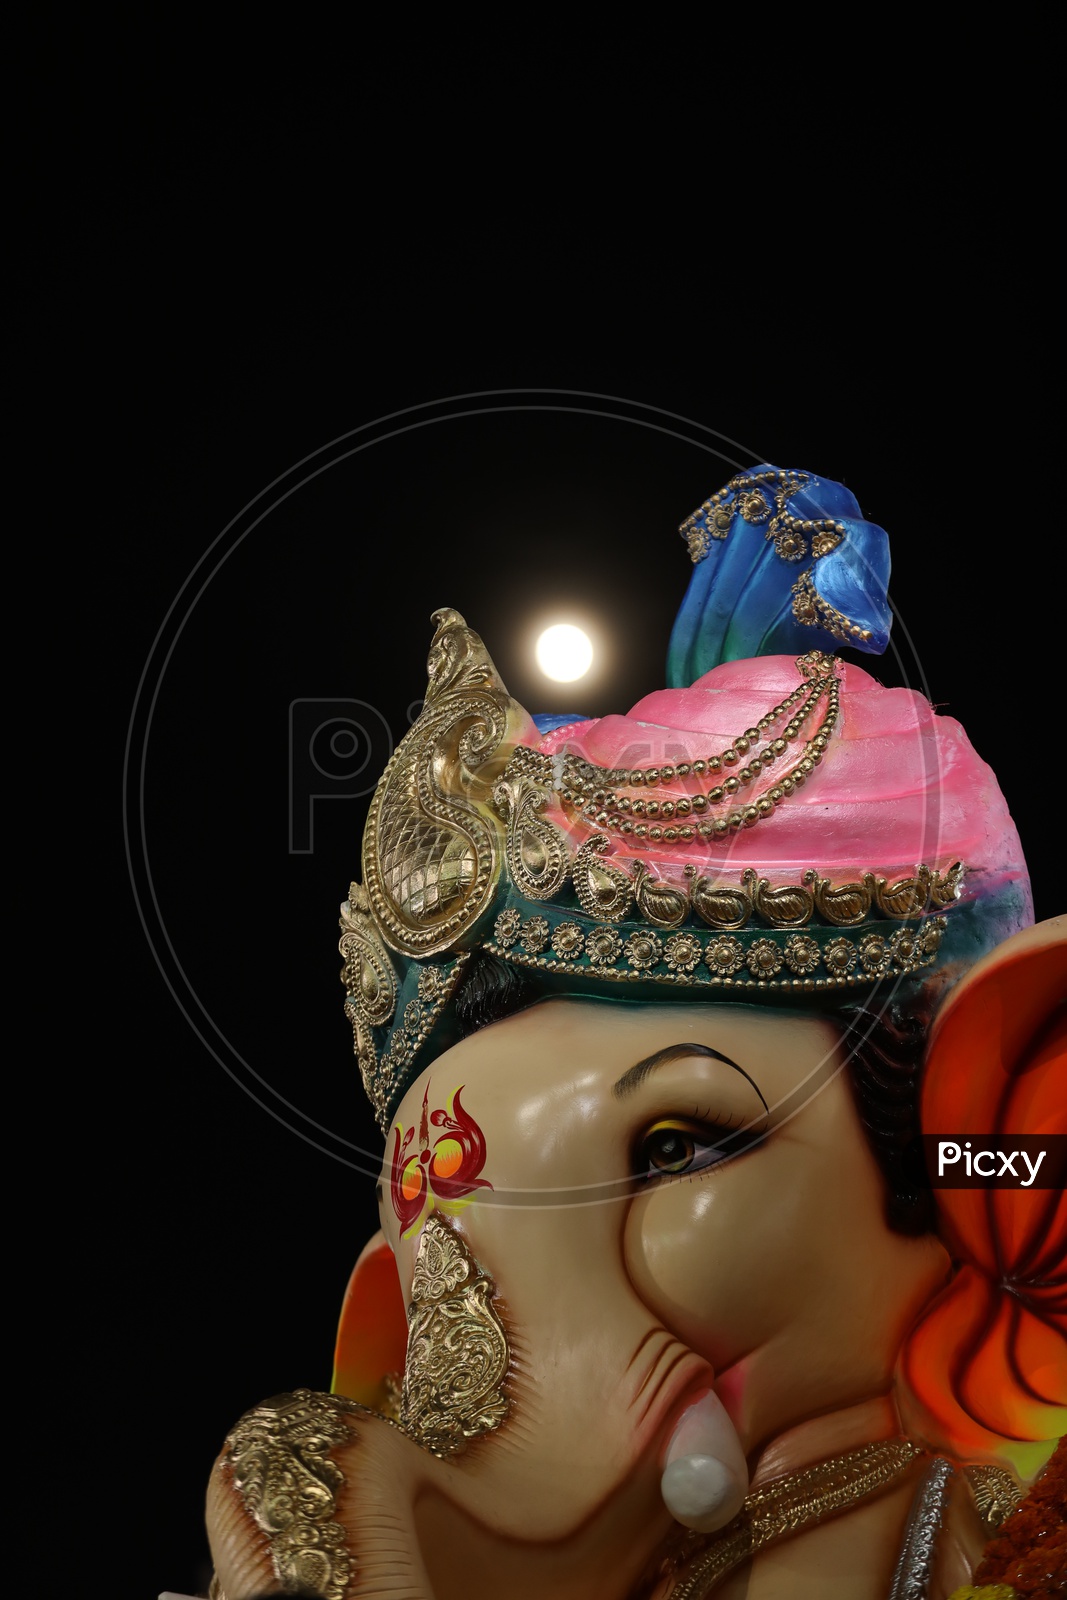 Moon raising behind Lord Ganesh's Head